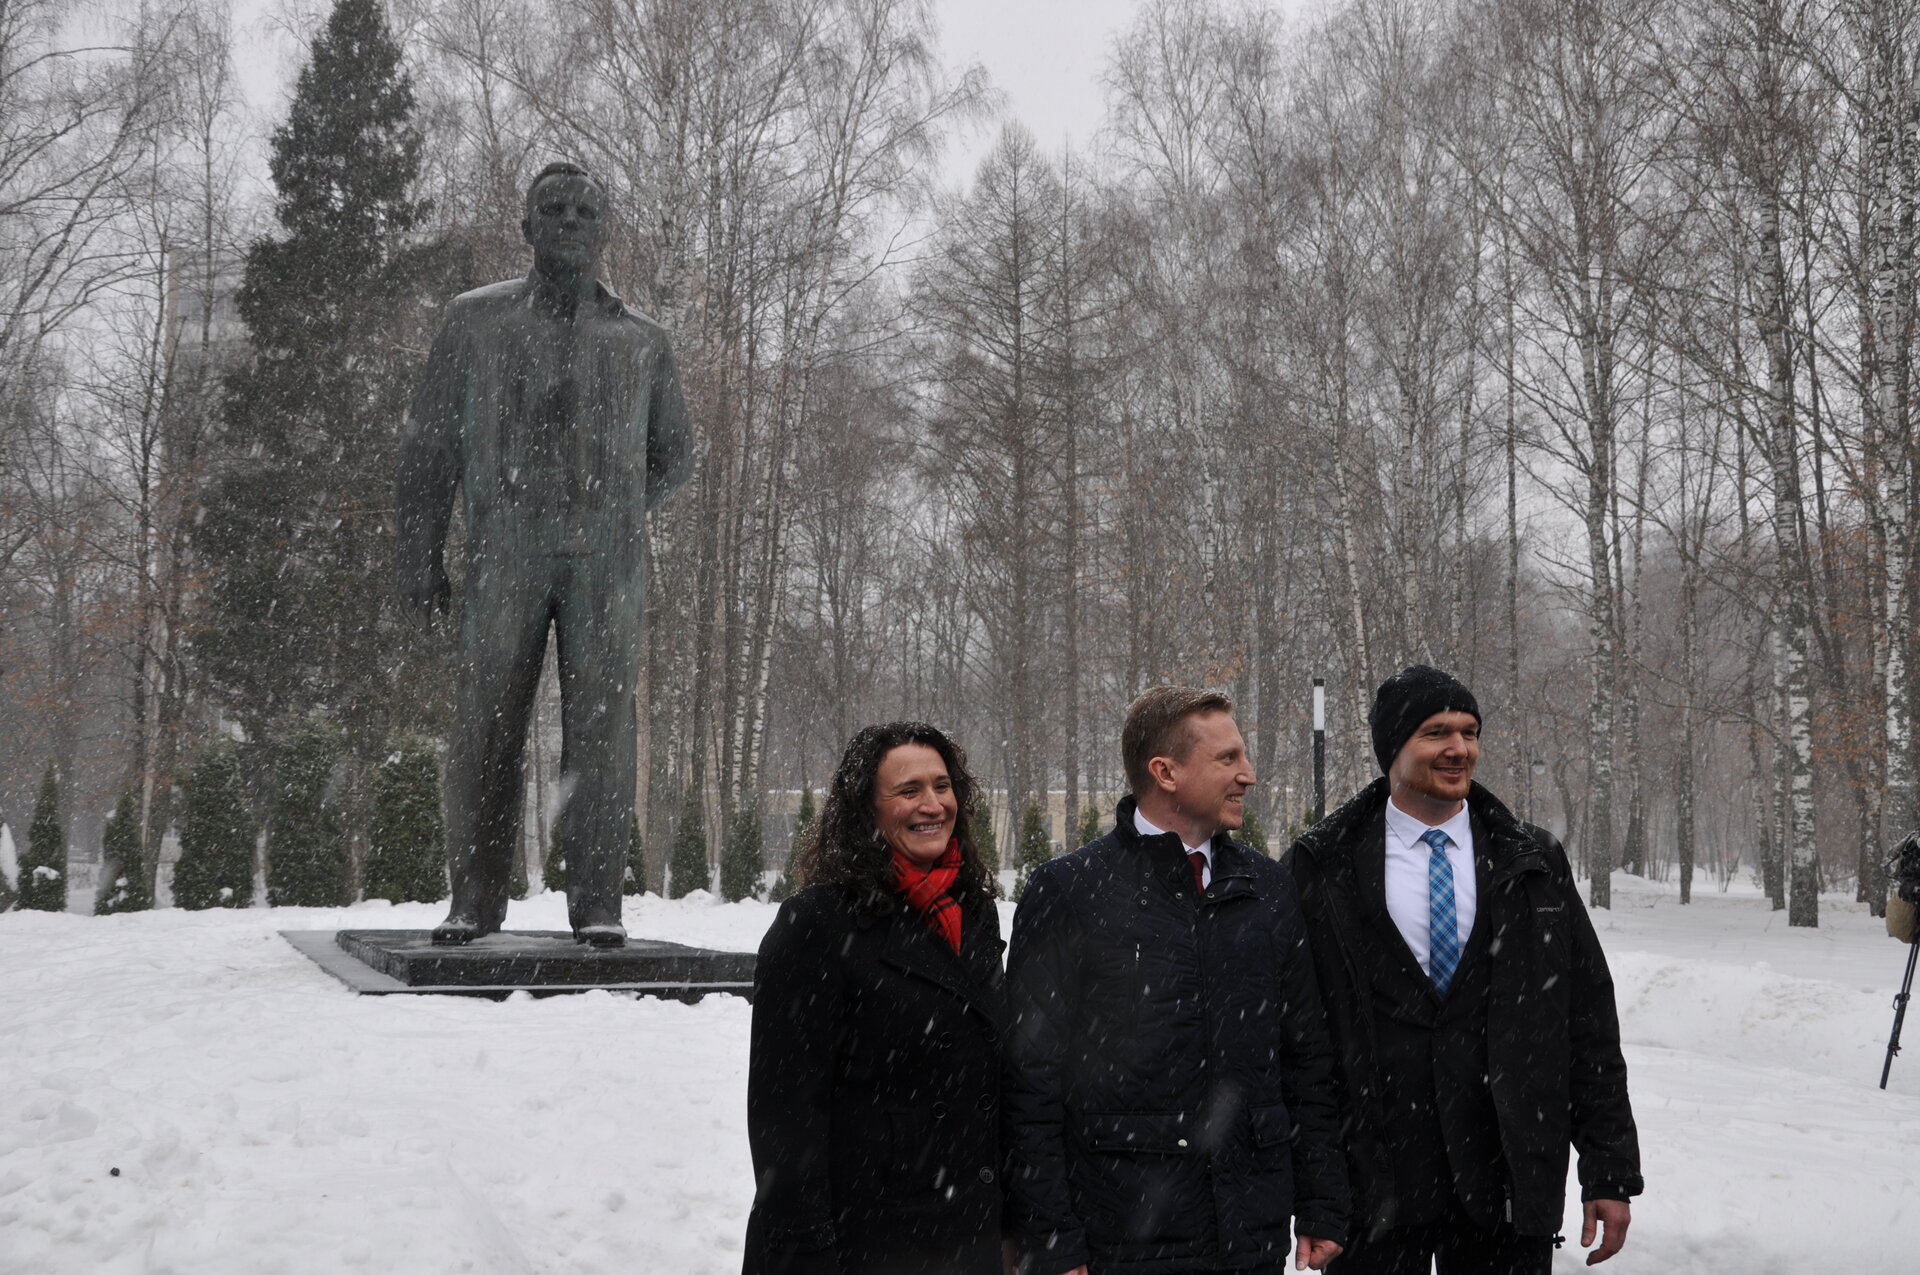 Serena, Sergei and Alexander by the Yuri Gagarin monument.